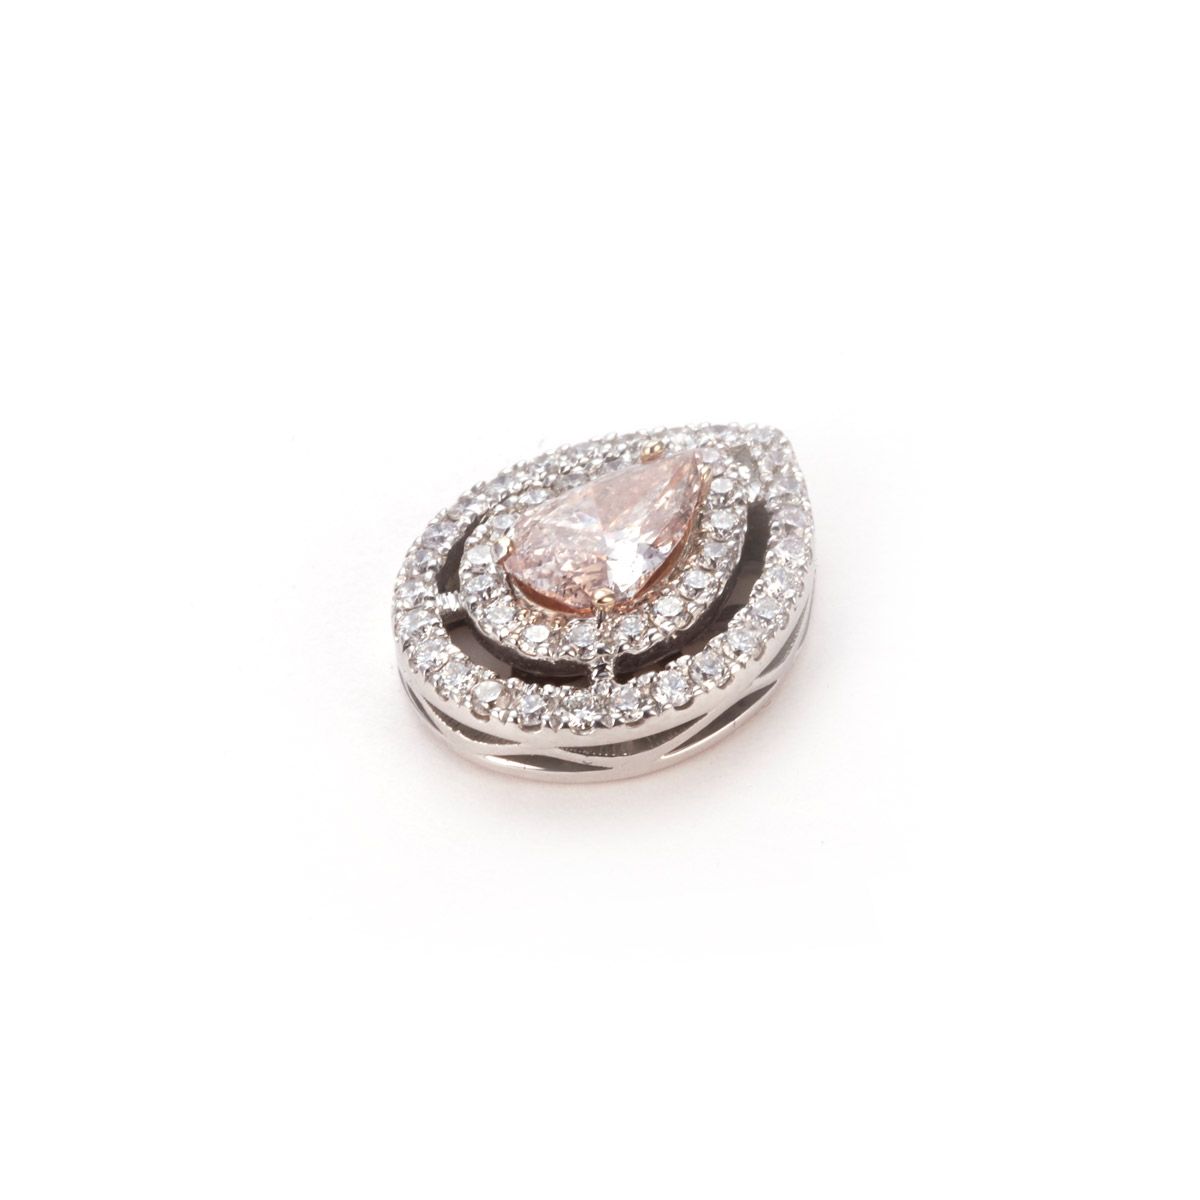 Fancy Light Orangy Pink Diamond Necklace, 1.00 Carat, Pear shape, GIA Certified, 1162614653